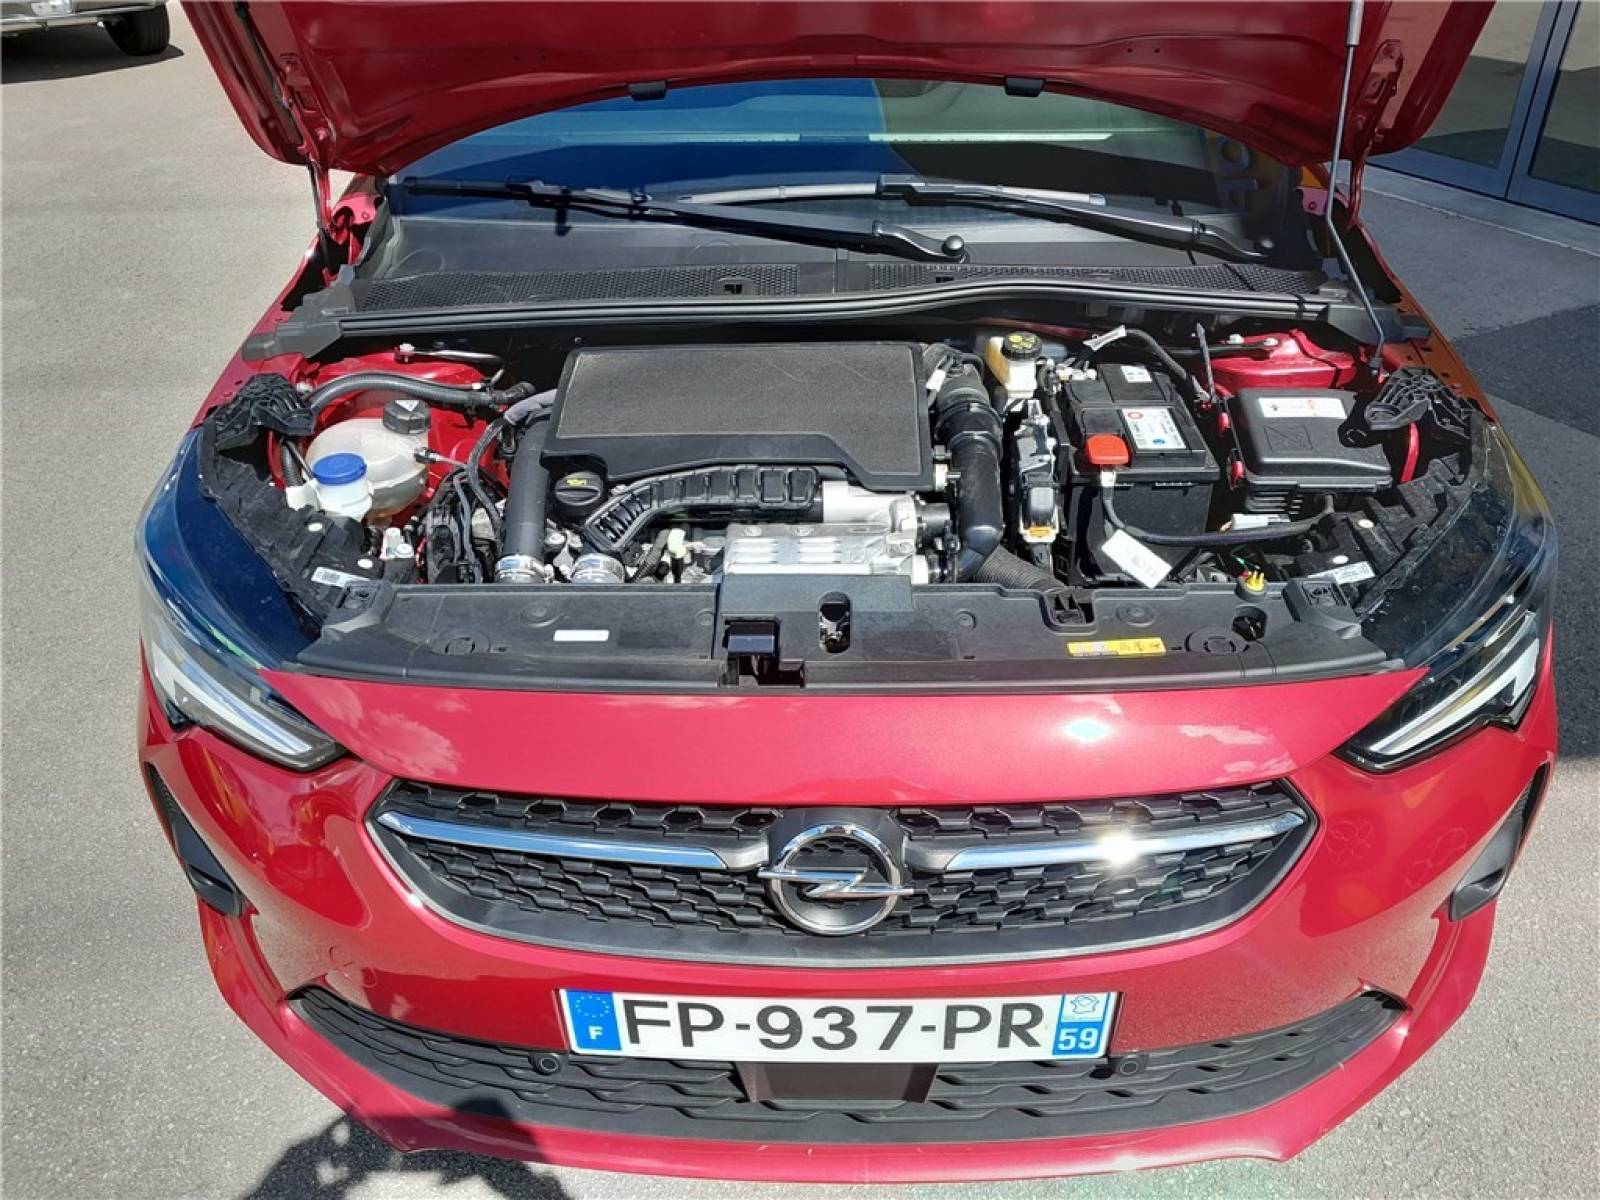 OPEL Corsa 1.2 Turbo 100 ch BVA8 - véhicule d'occasion - Groupe Guillet - Opel Magicauto - Chalon-sur-Saône - 71380 - Saint-Marcel - 13